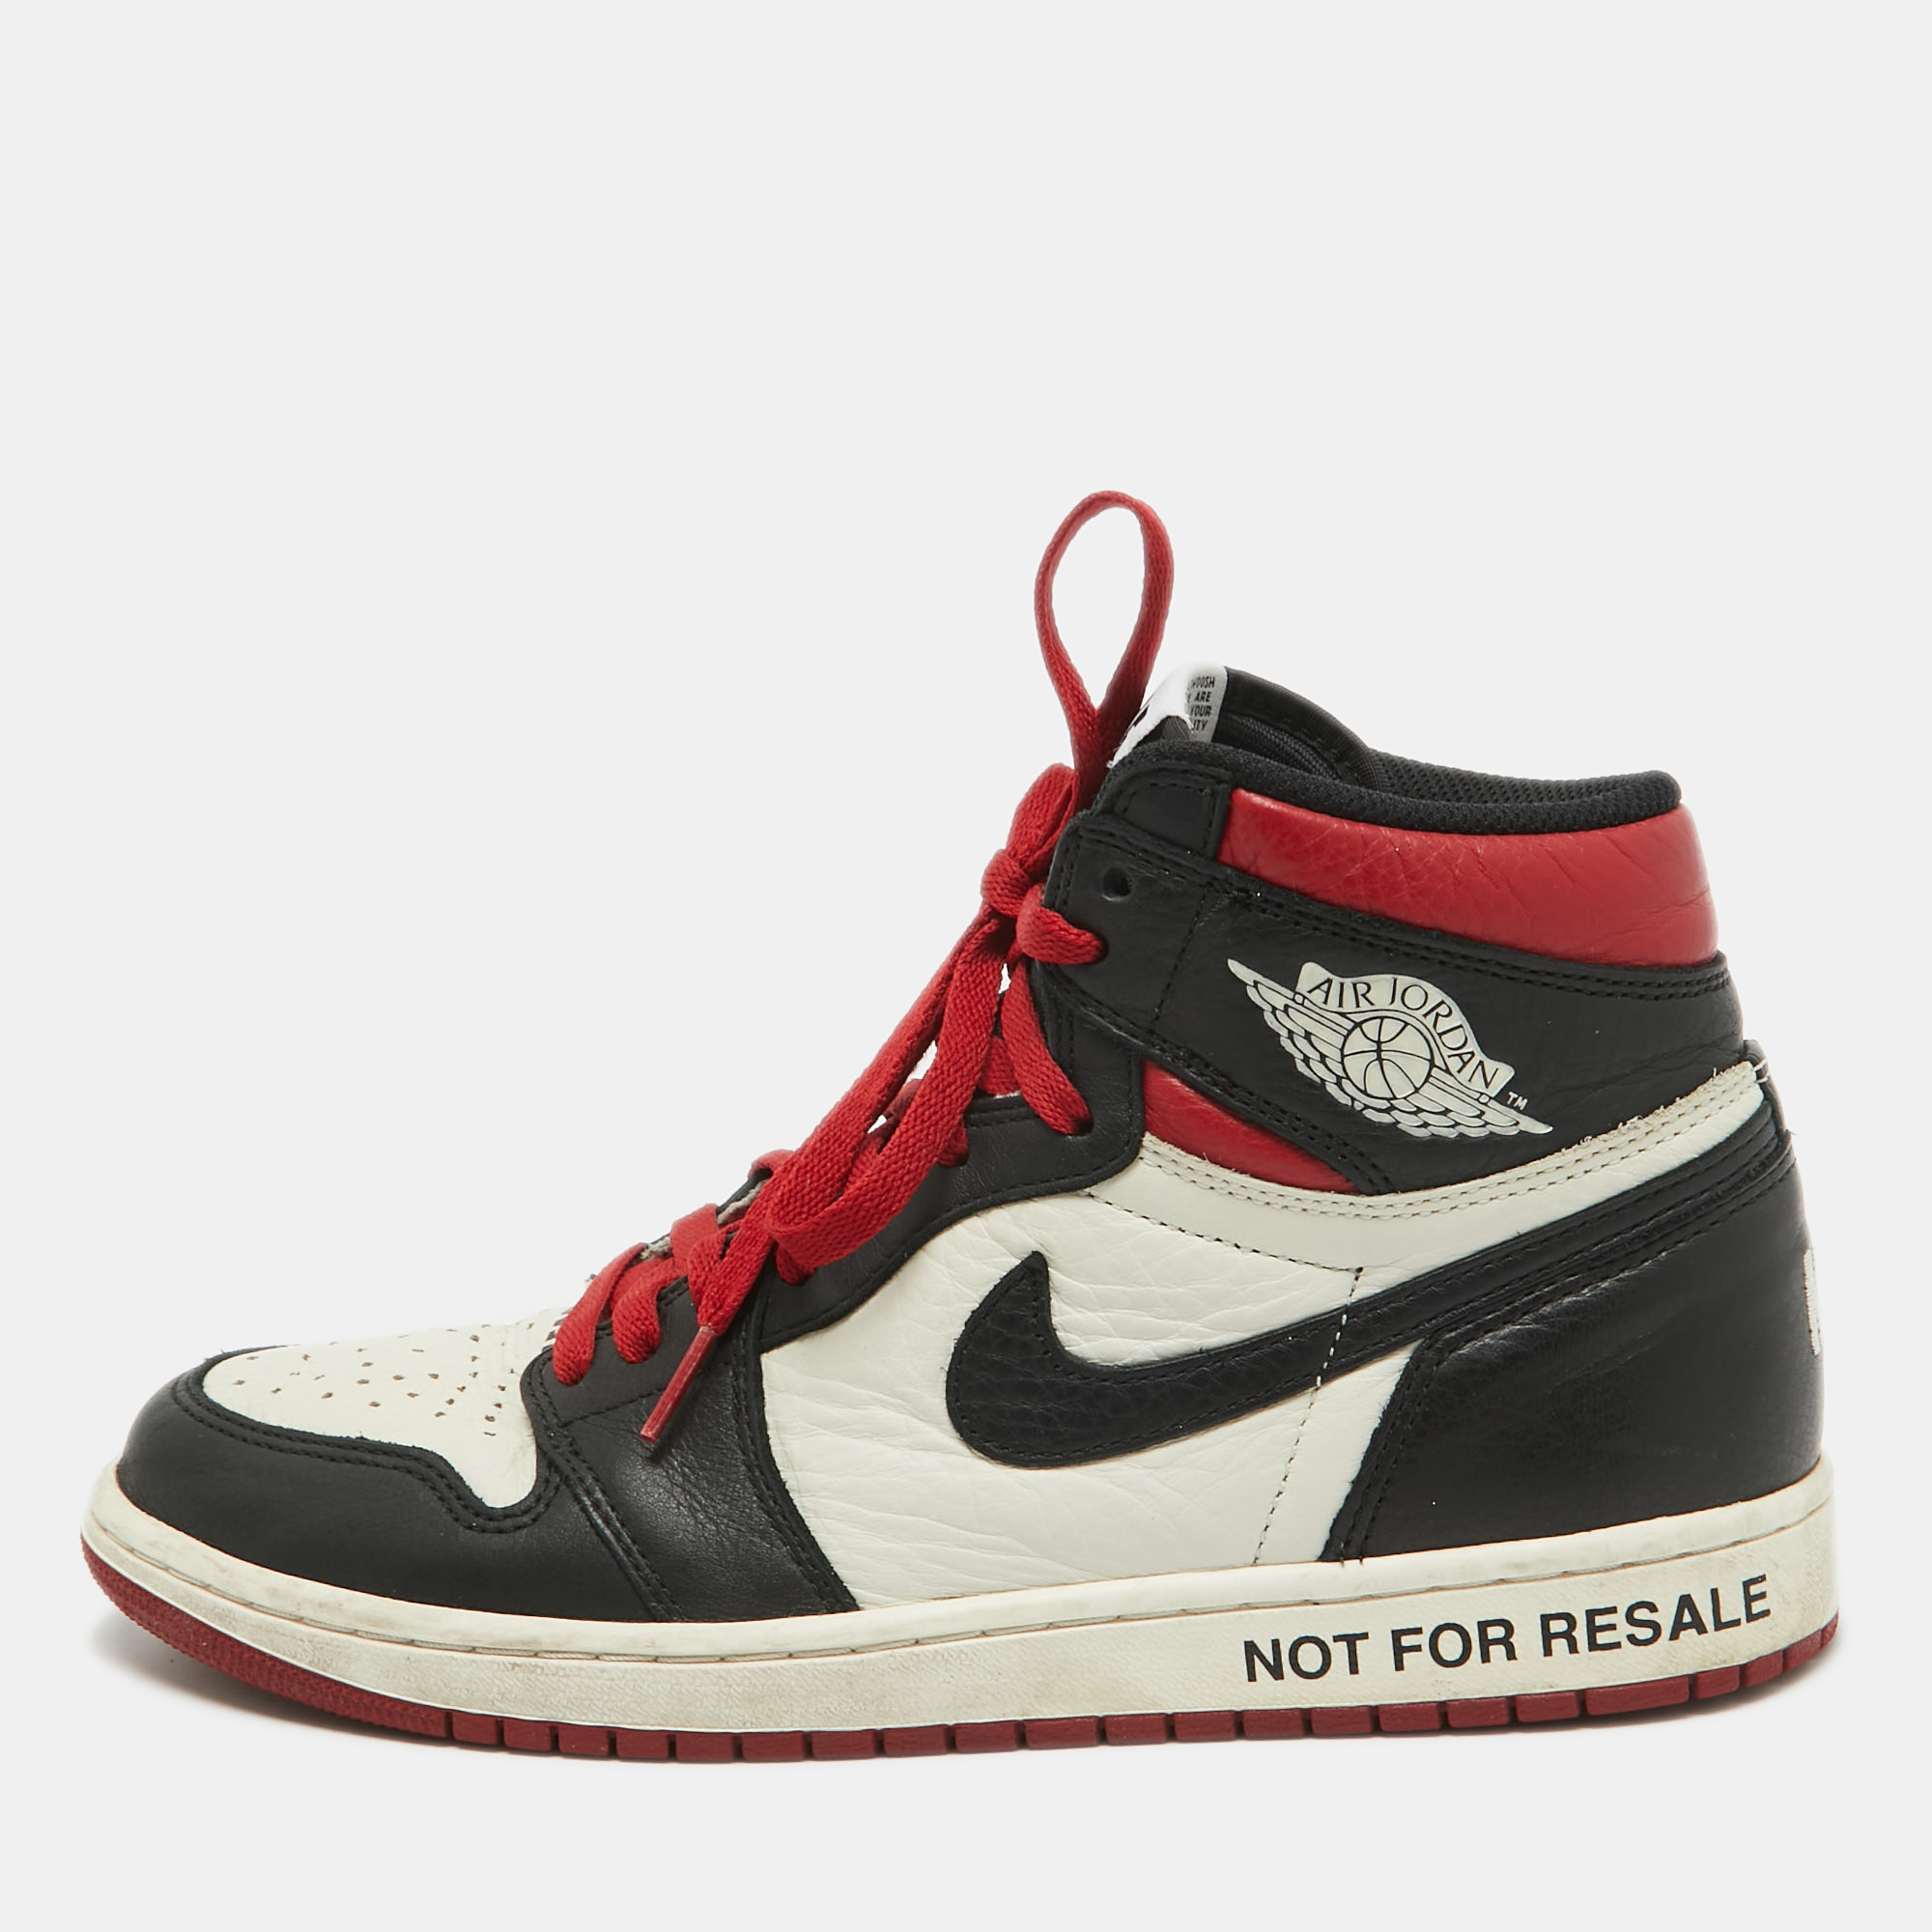 

Air Jordans Multicolor Leather Jordan 1 Retro High Not for Resale Varsity Red Sneakers Size 44